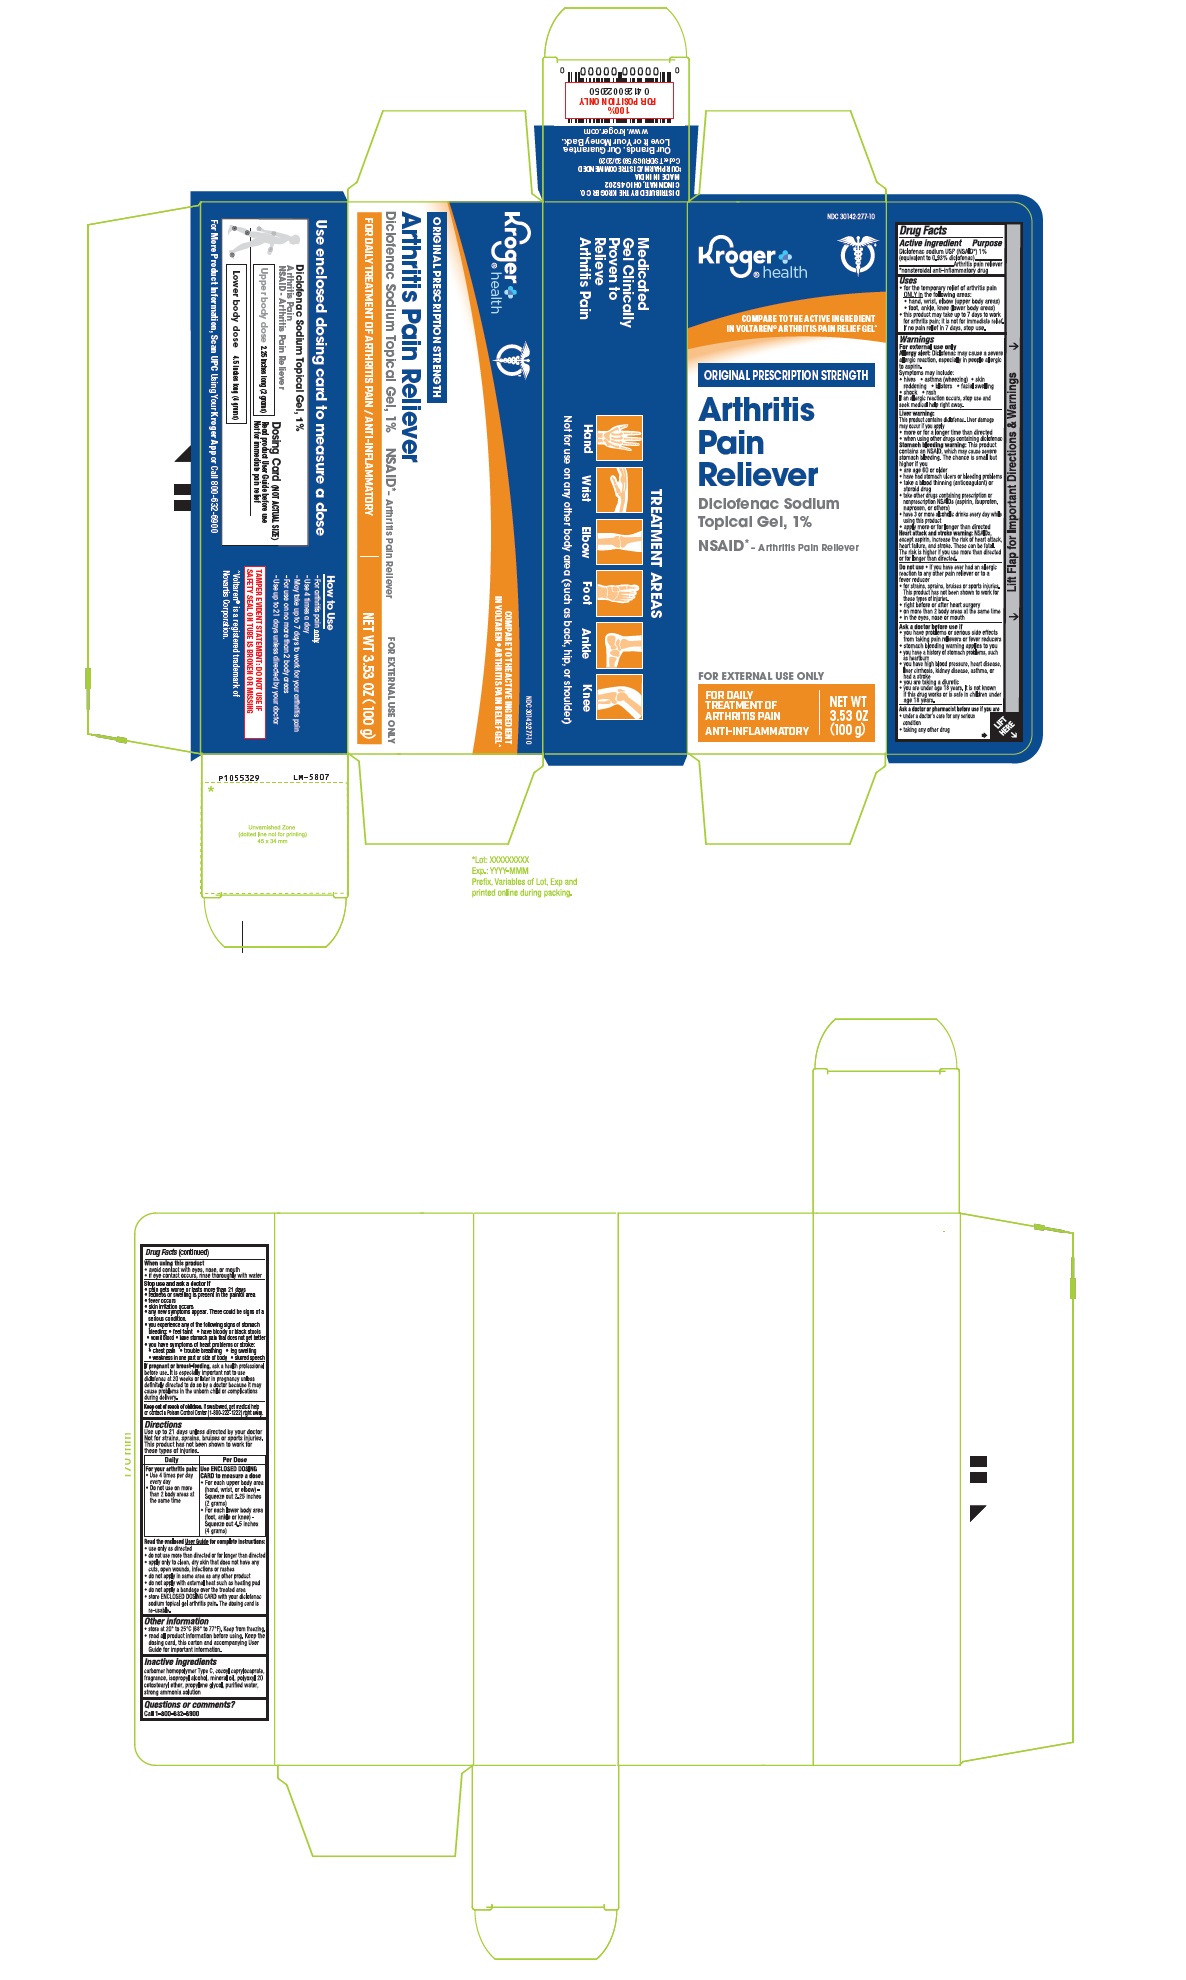 PACKAGE LABEL-PRINCIPAL DISPLAY PANEL - 1% w/w Tube Carton Label (100 g tube)